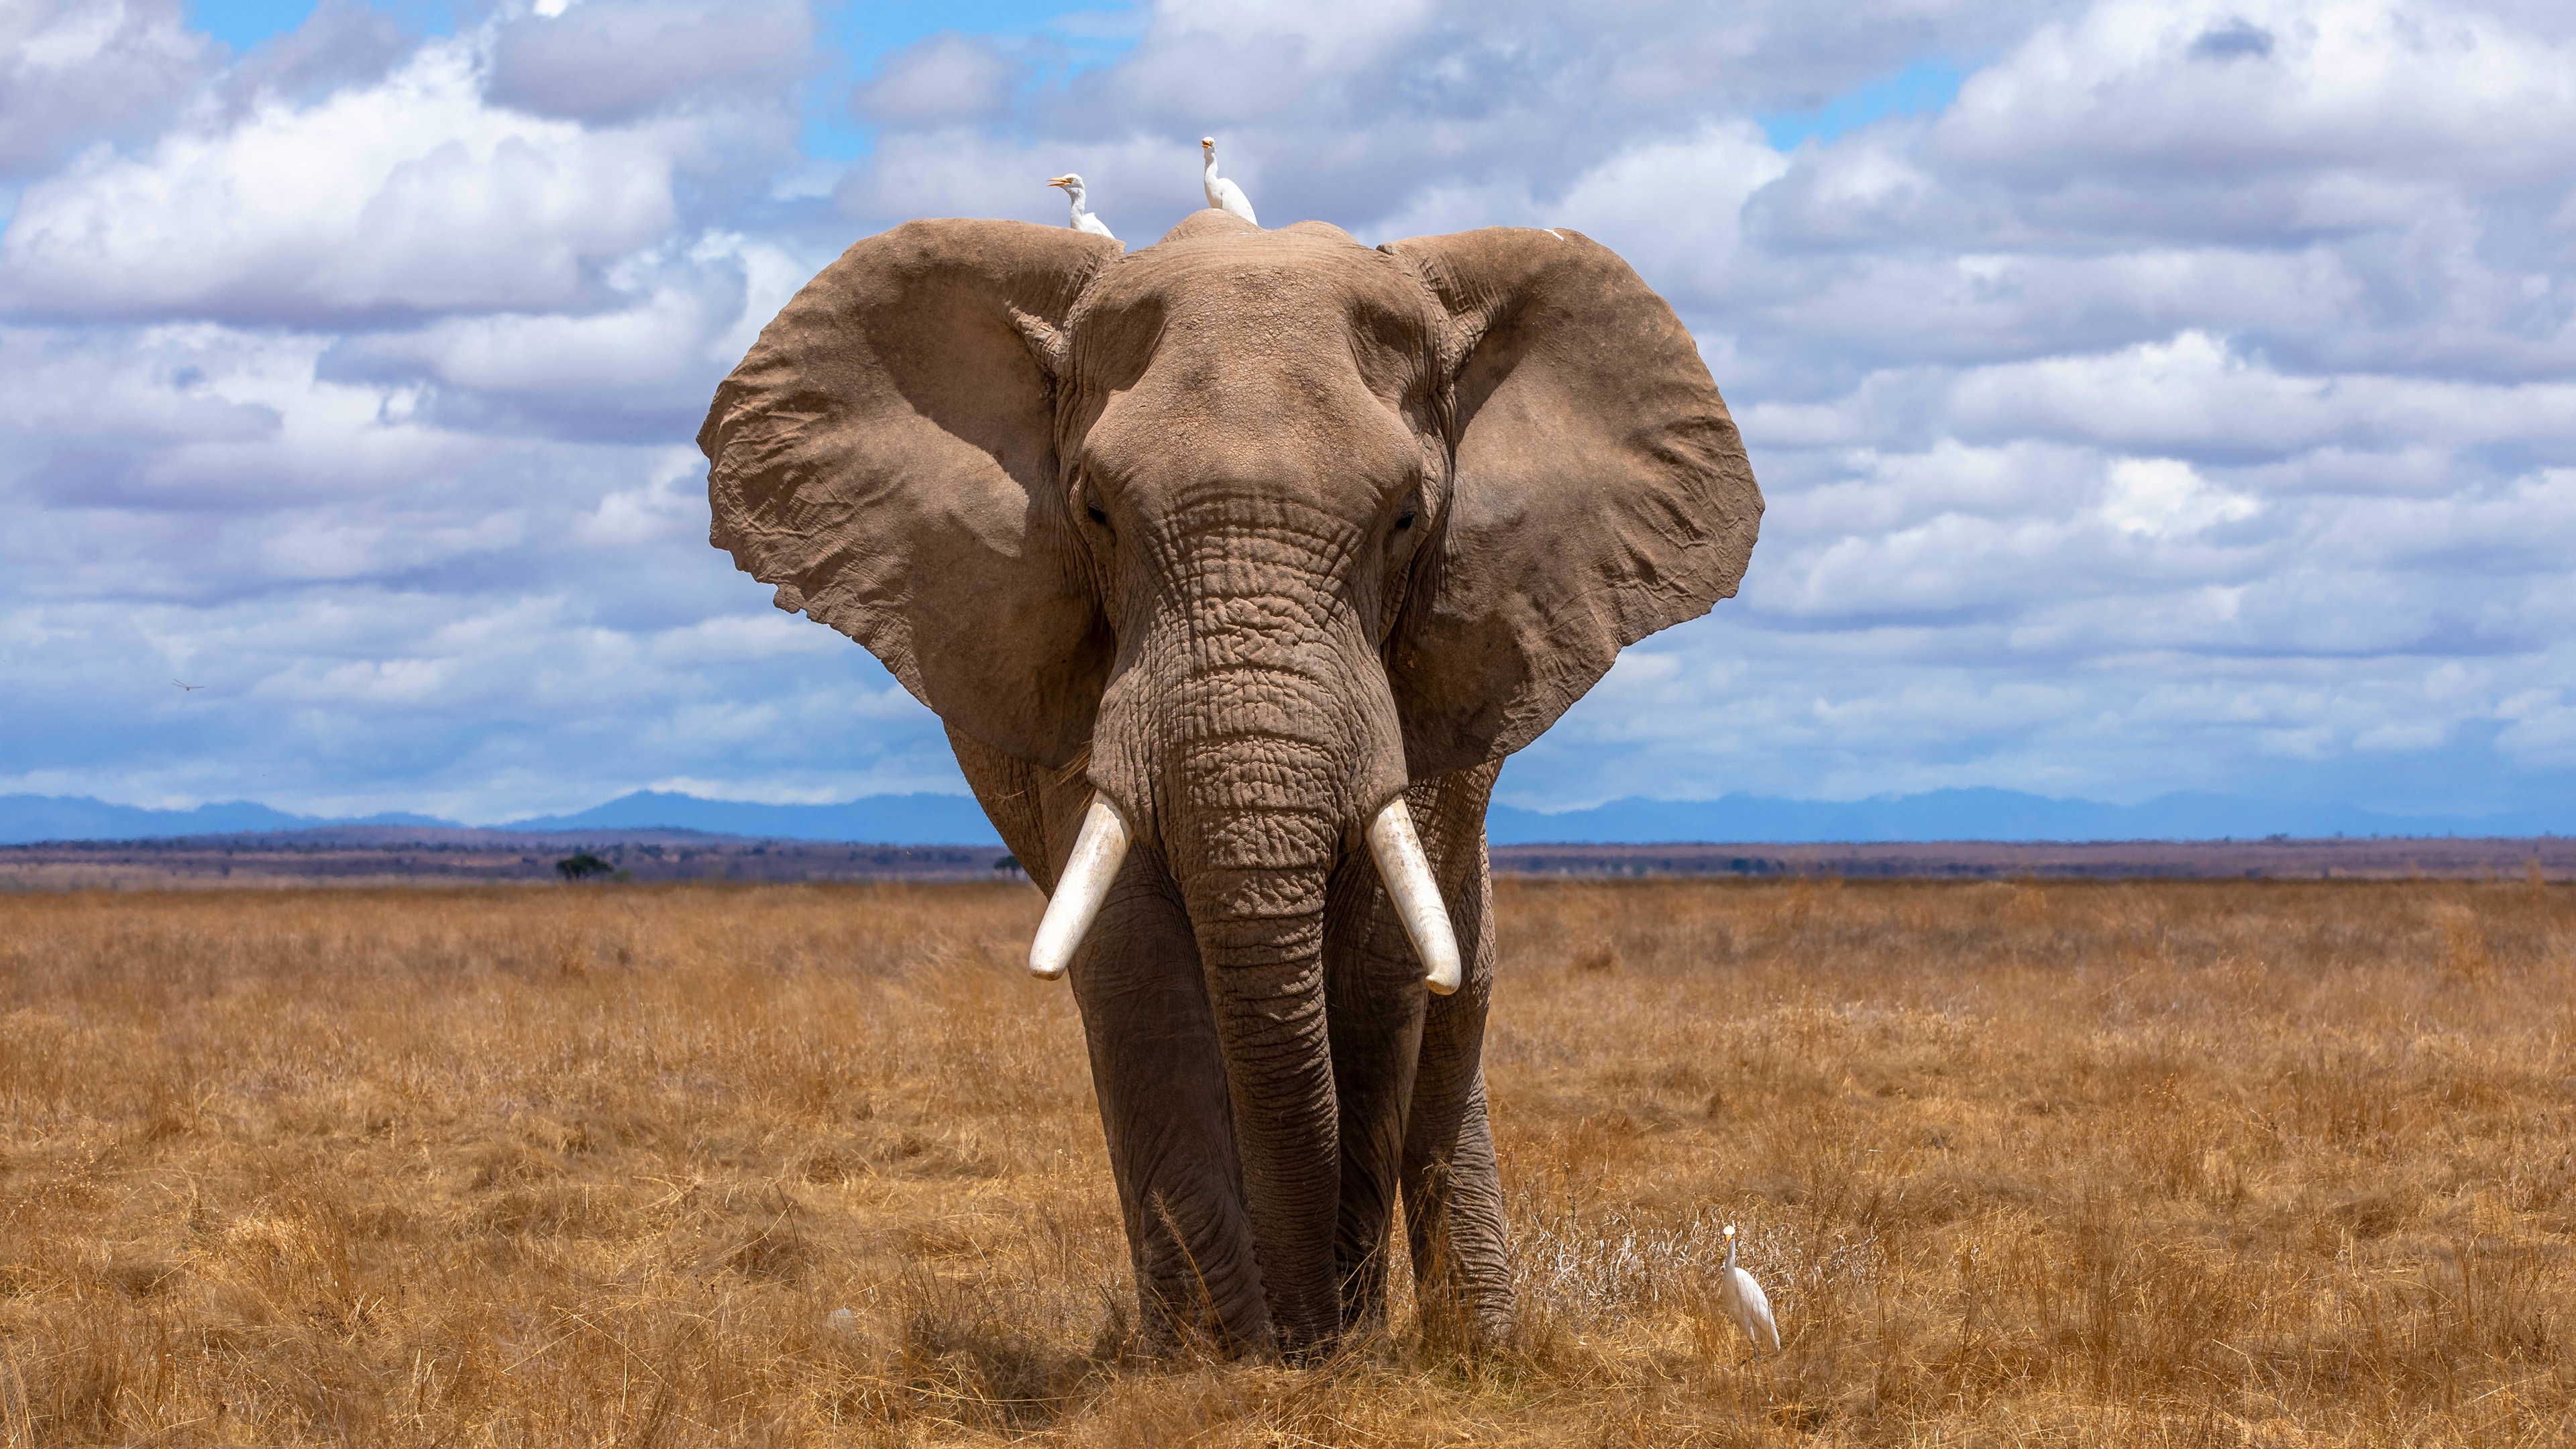 A big elephant in Africa